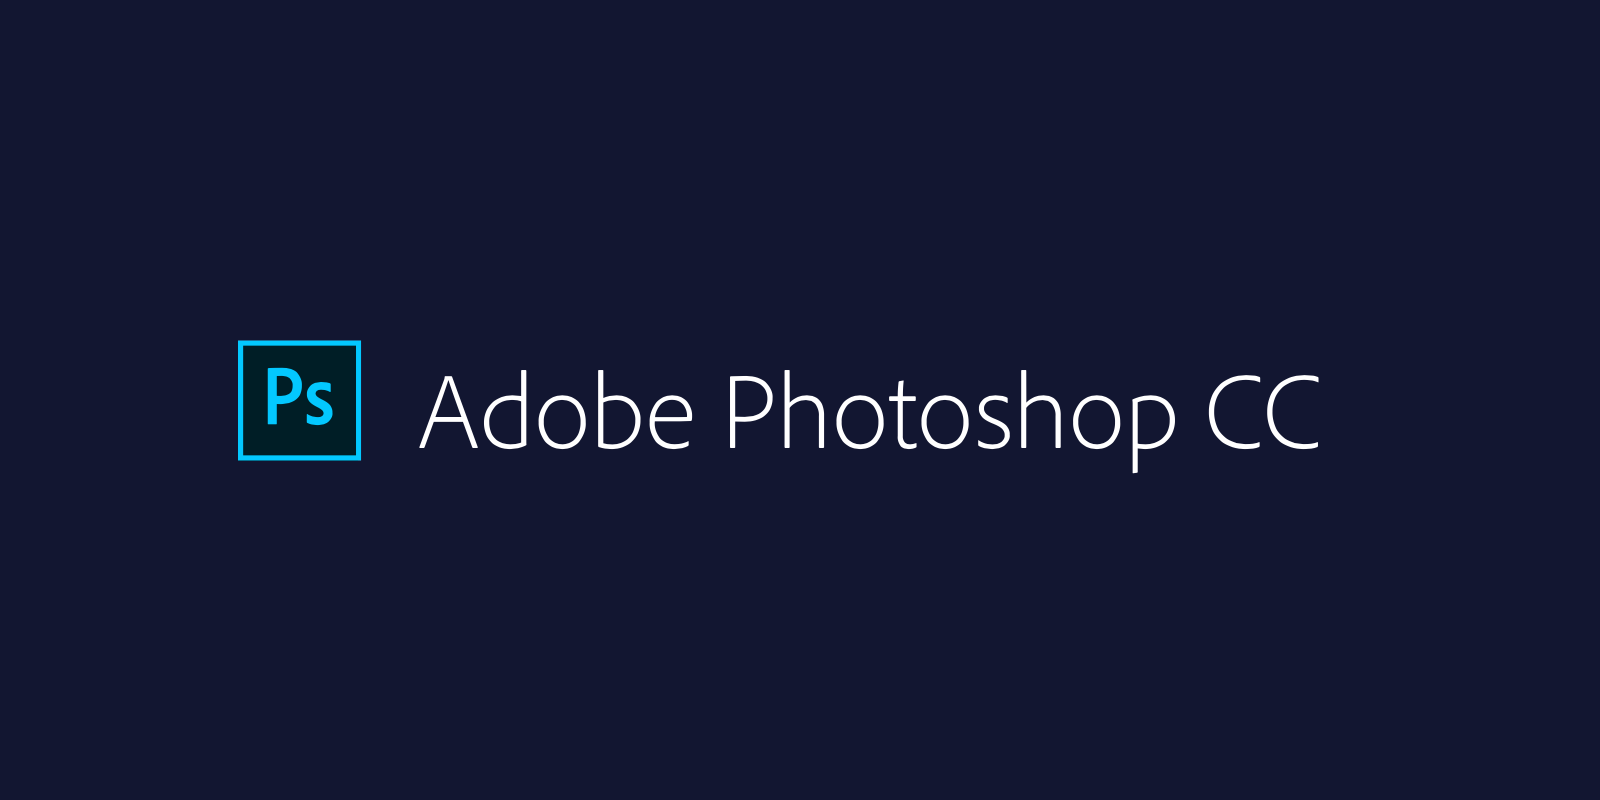 Adobe Photoshop CC 24.1.1 Crack